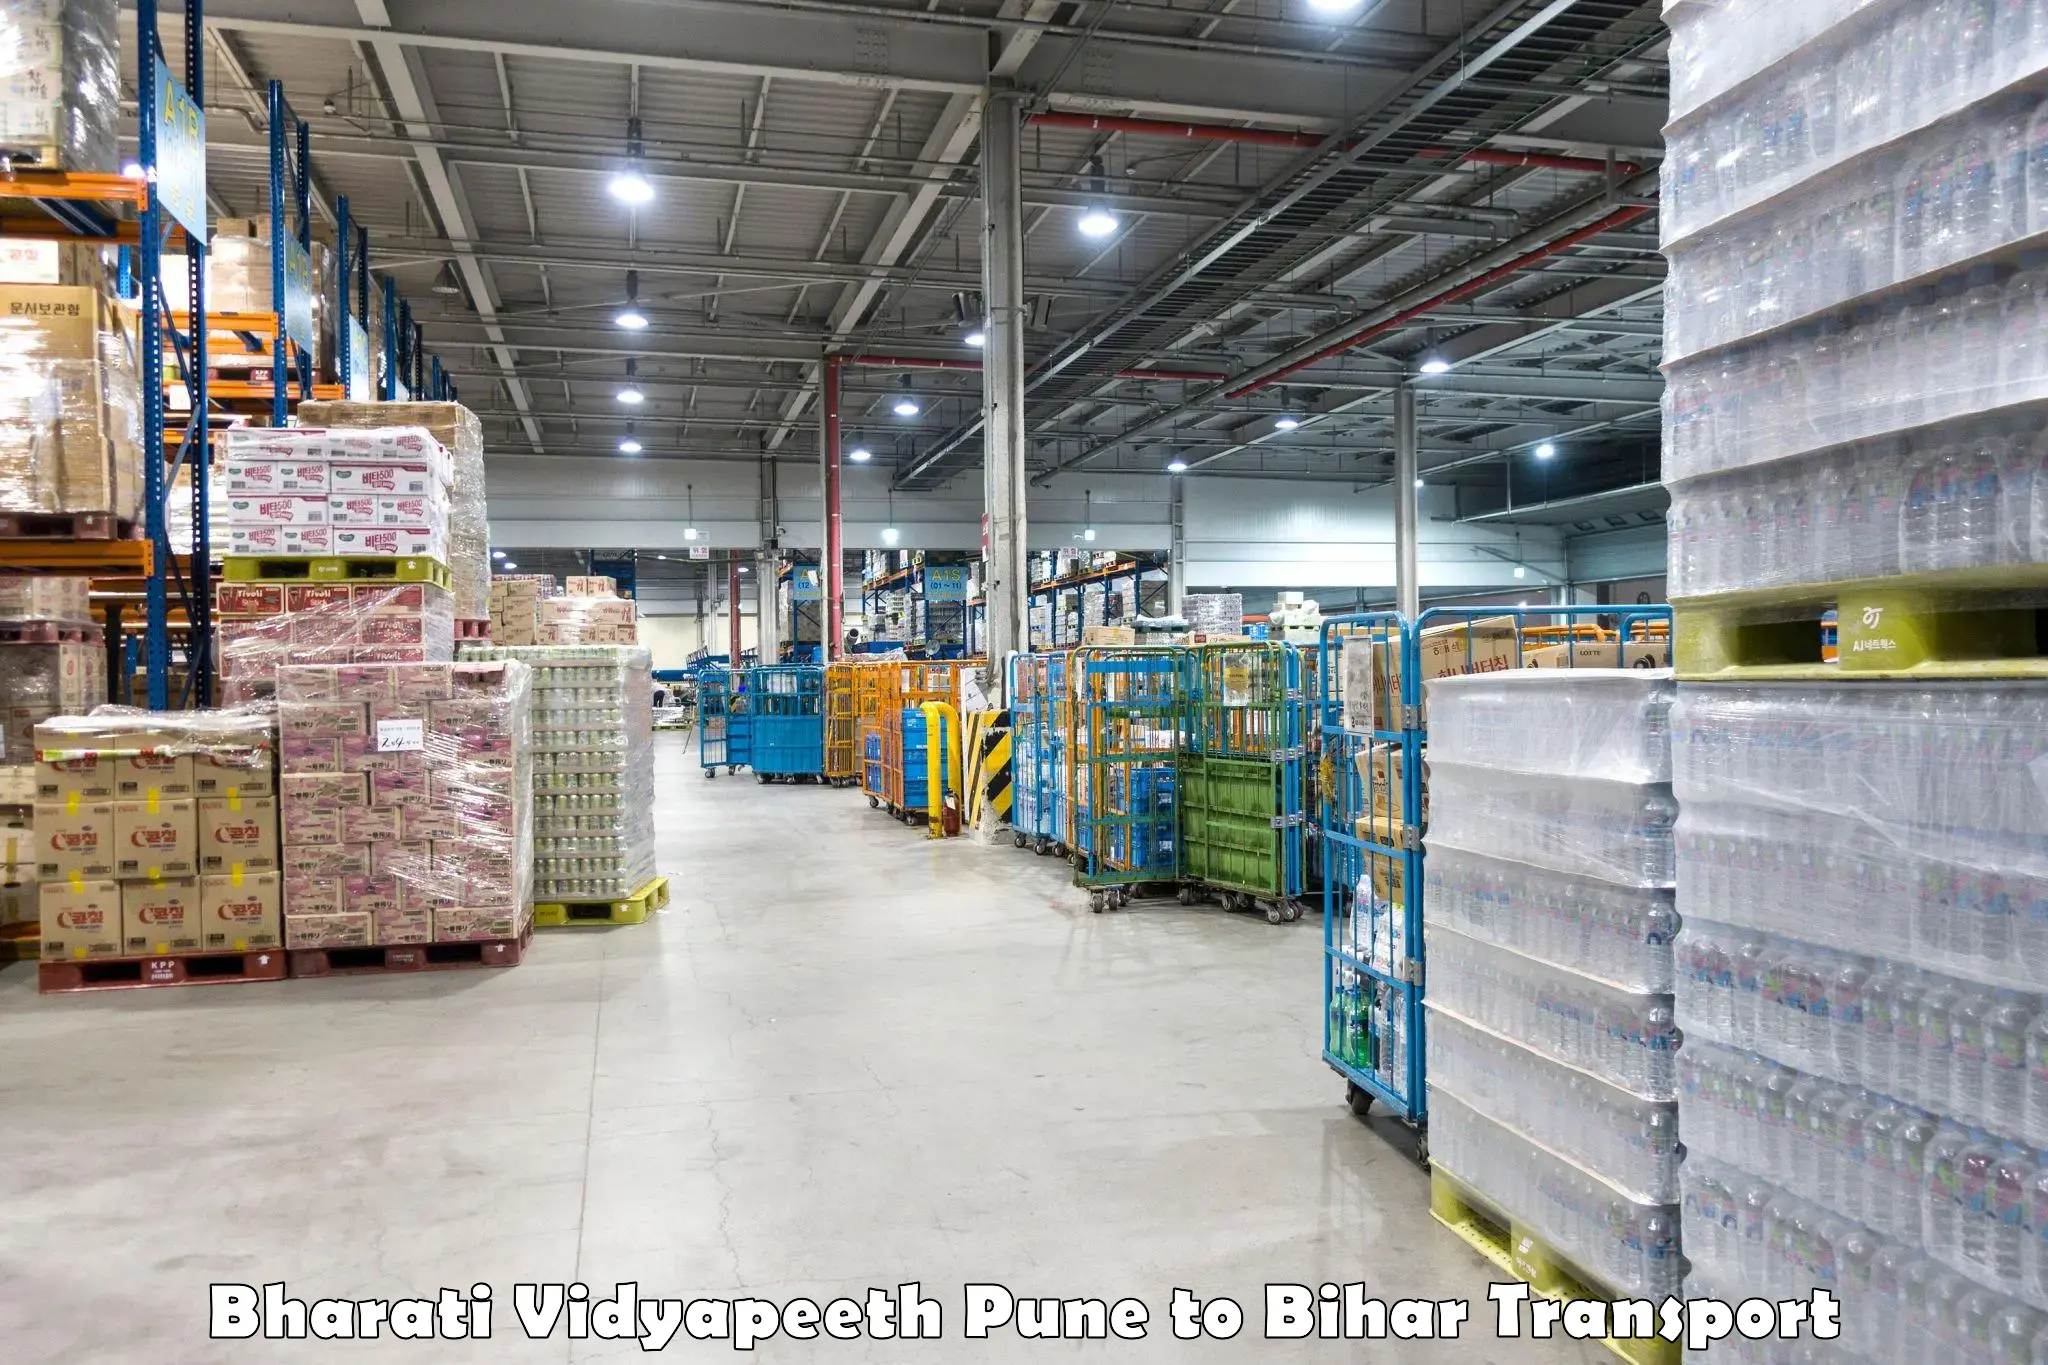 Truck transport companies in India Bharati Vidyapeeth Pune to Patna